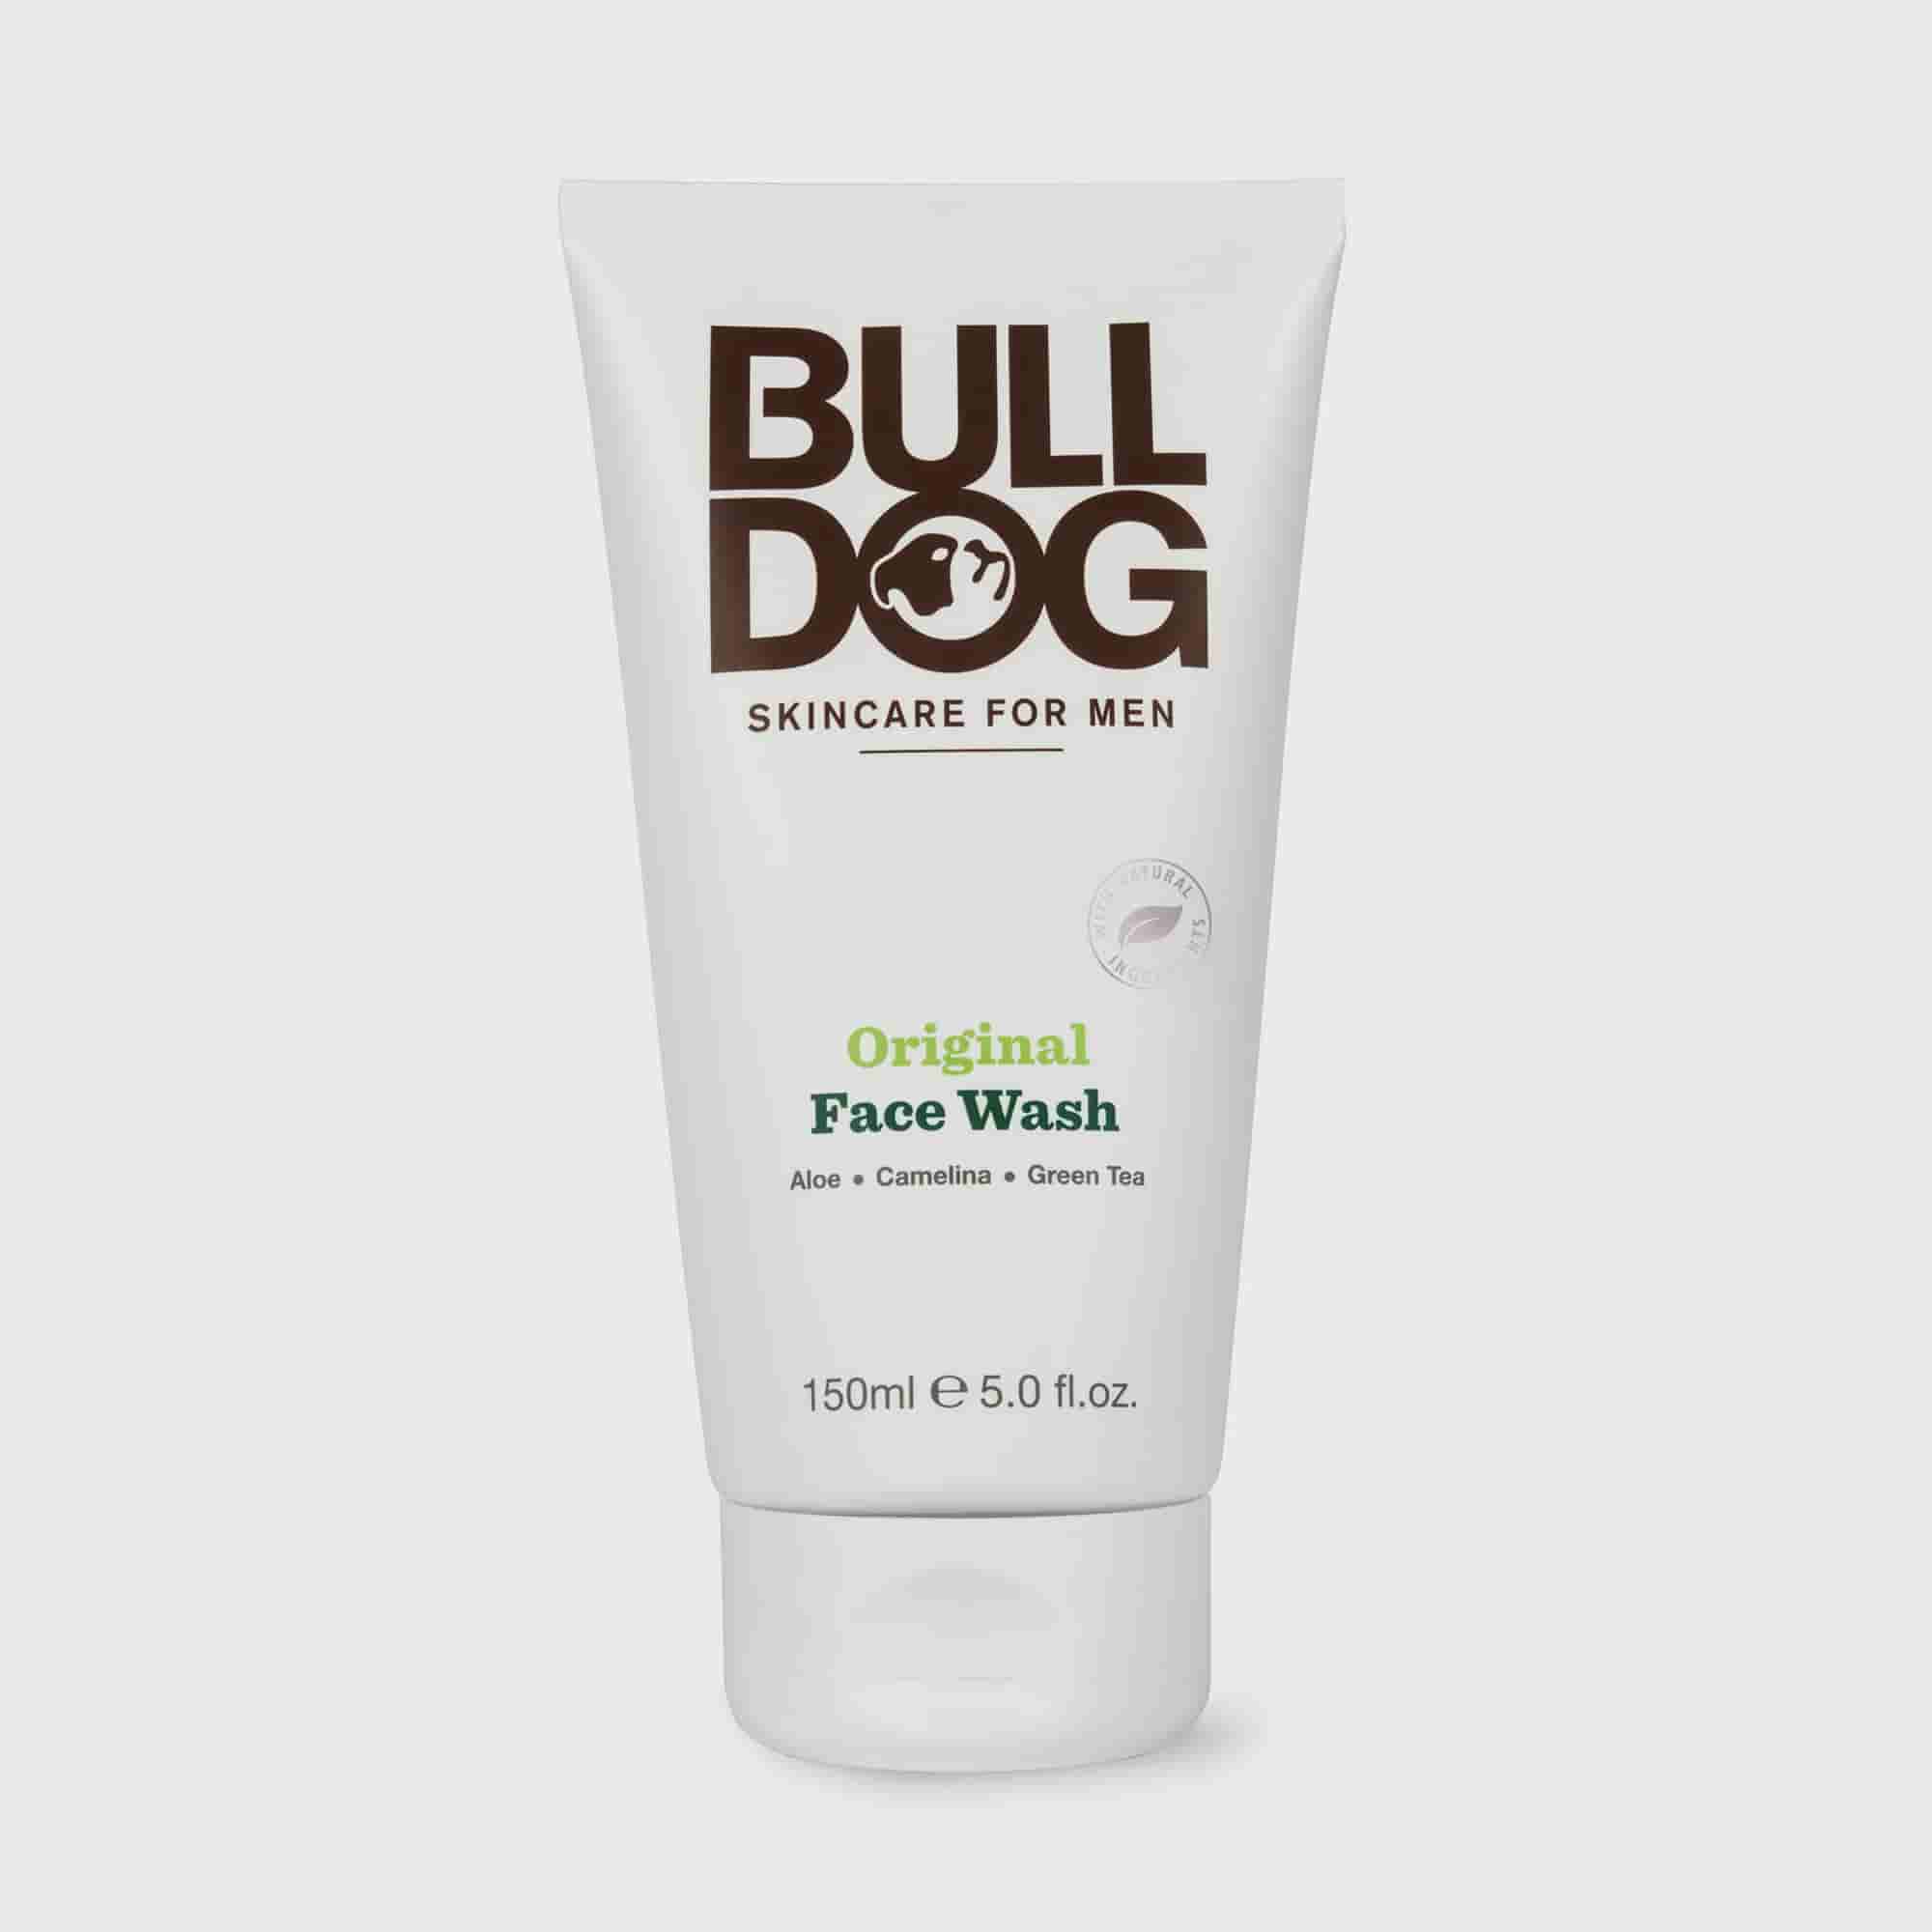 Bulldog Skincare for Men Original Face Wash, 5 fl oz